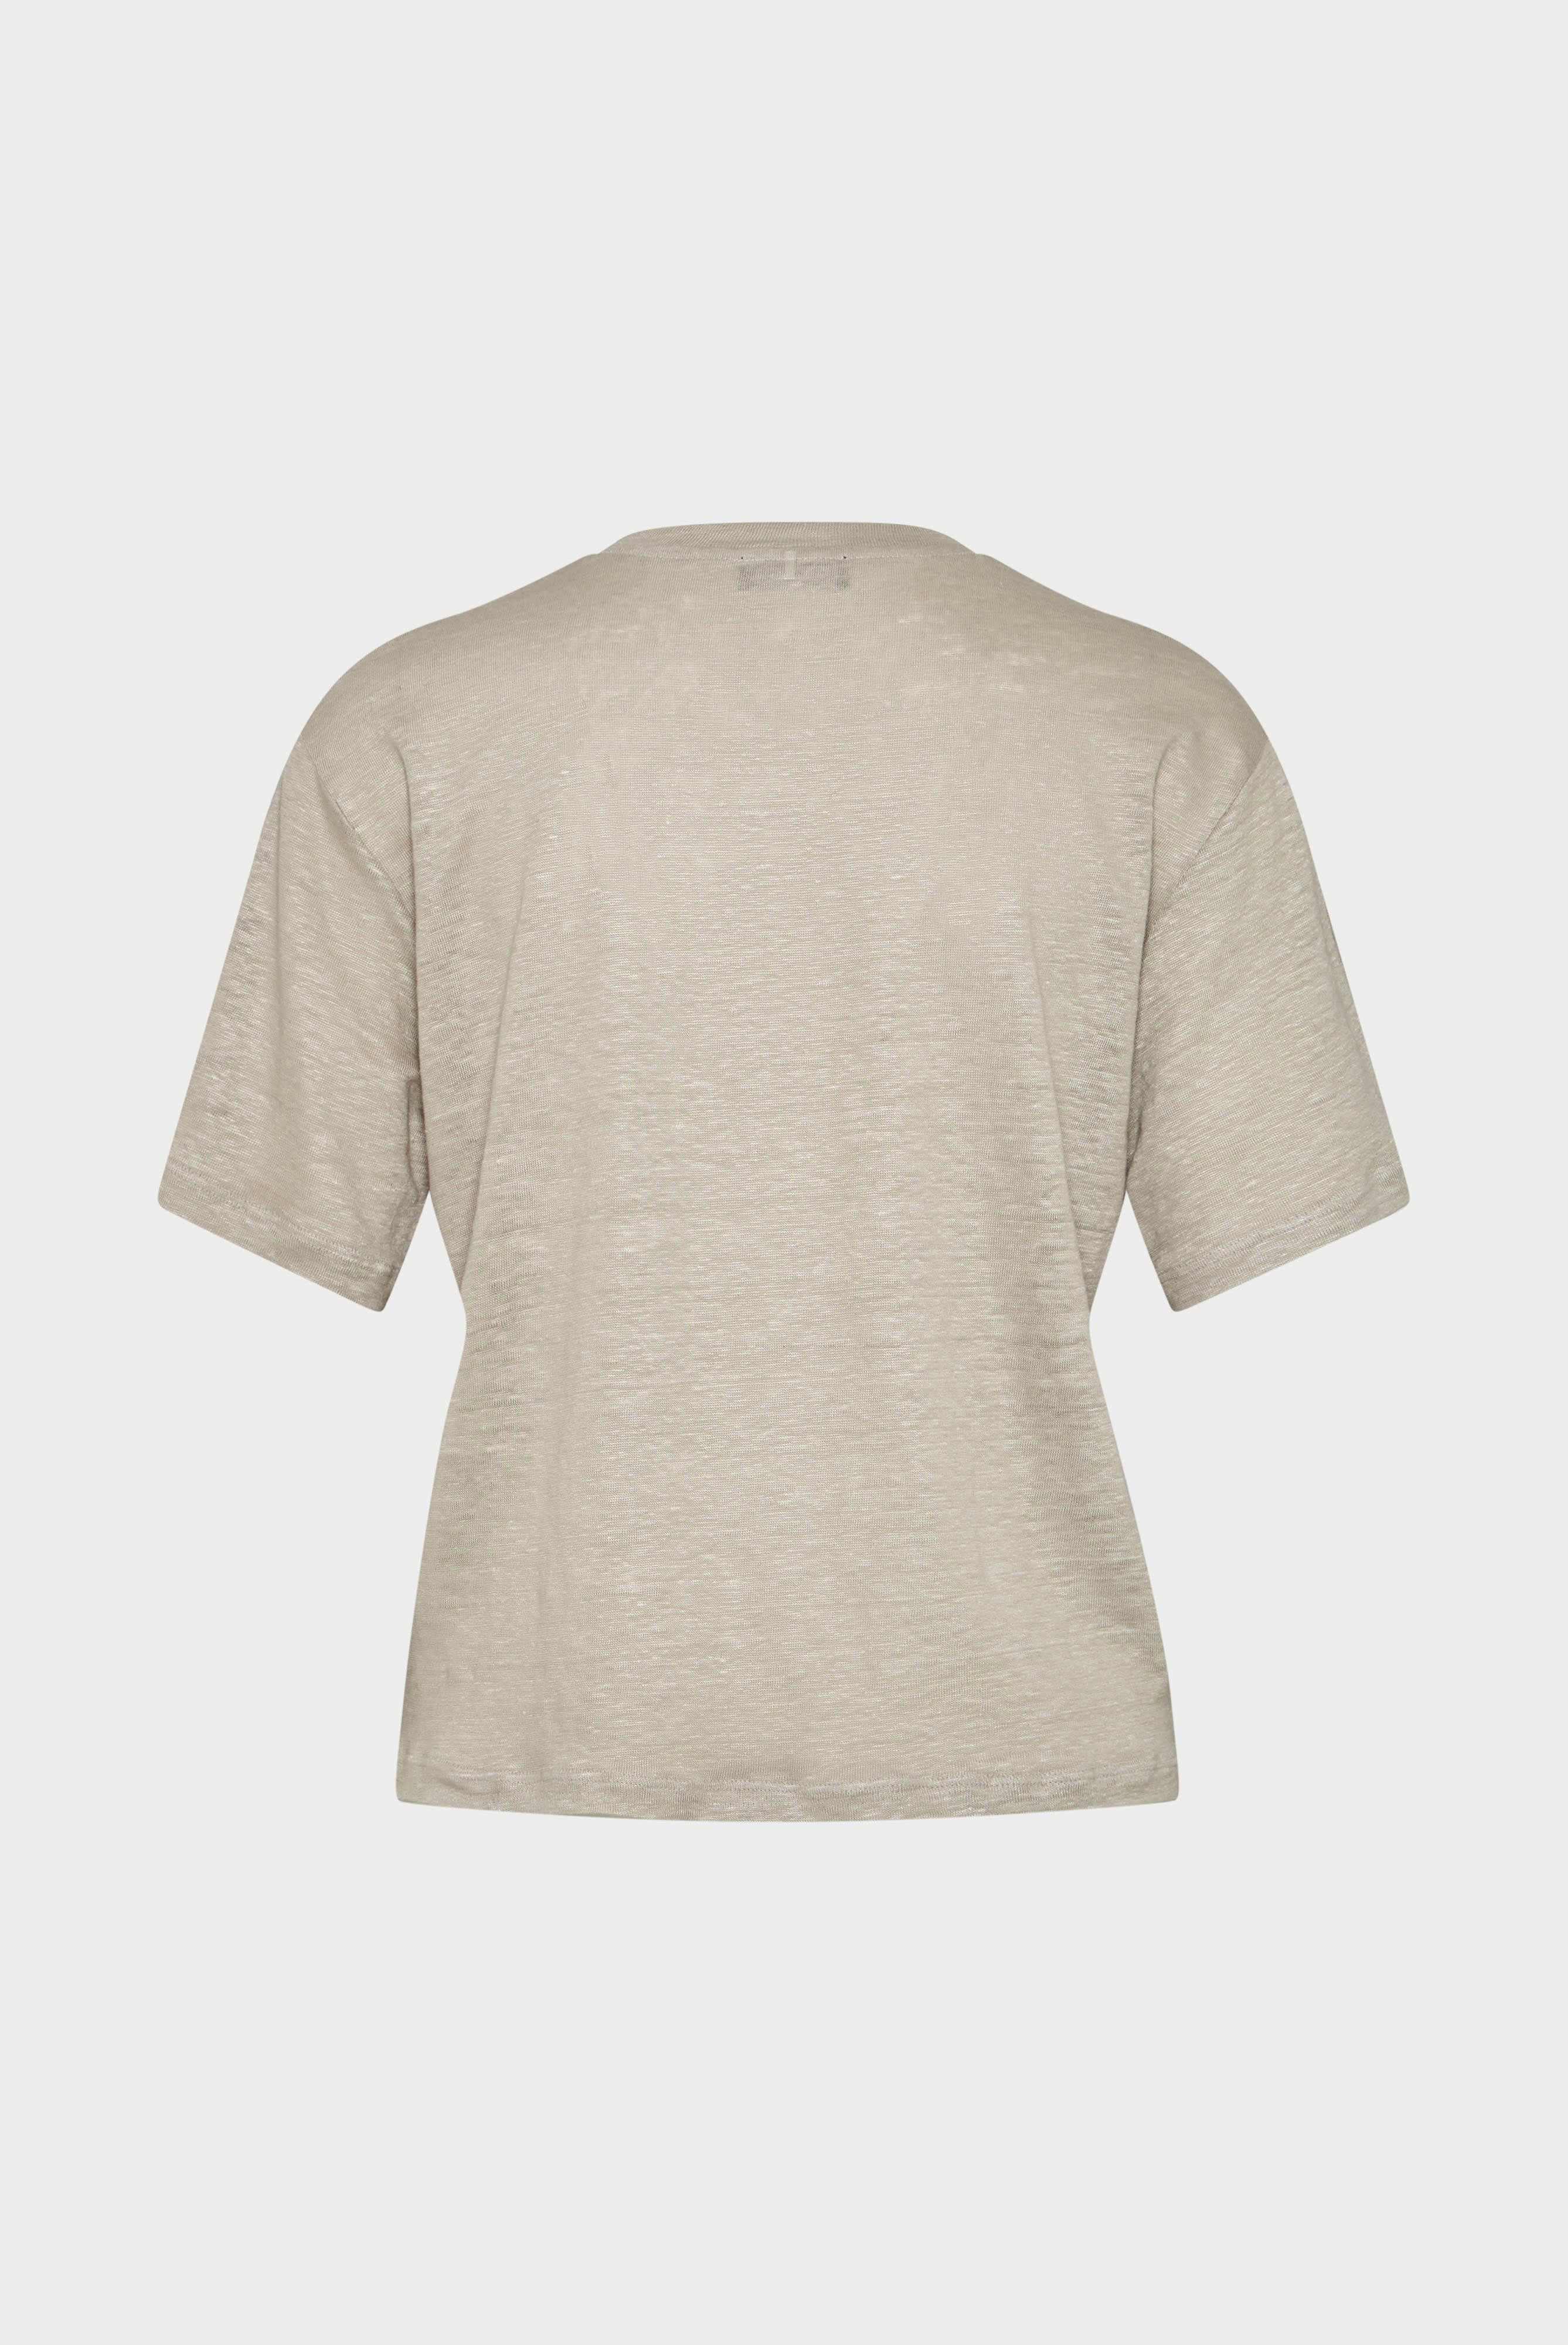 Tops & T-Shirts+Linen Shirt Jersey Boxy Fit+05.2912.Q8.180125.140.48